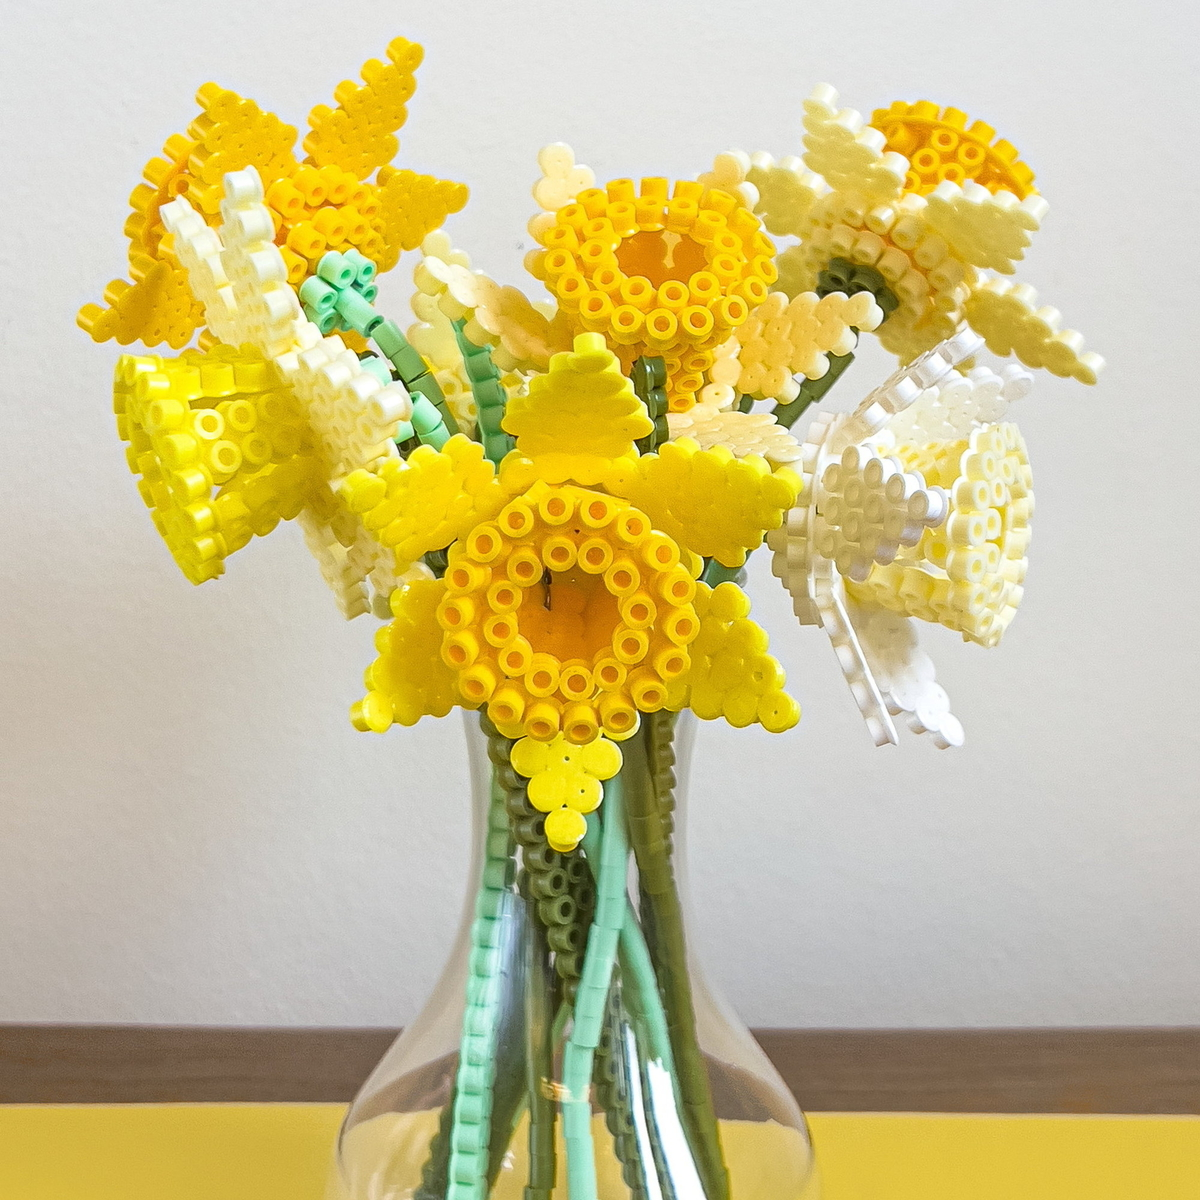 Bead a bouquet of Hama daffodils